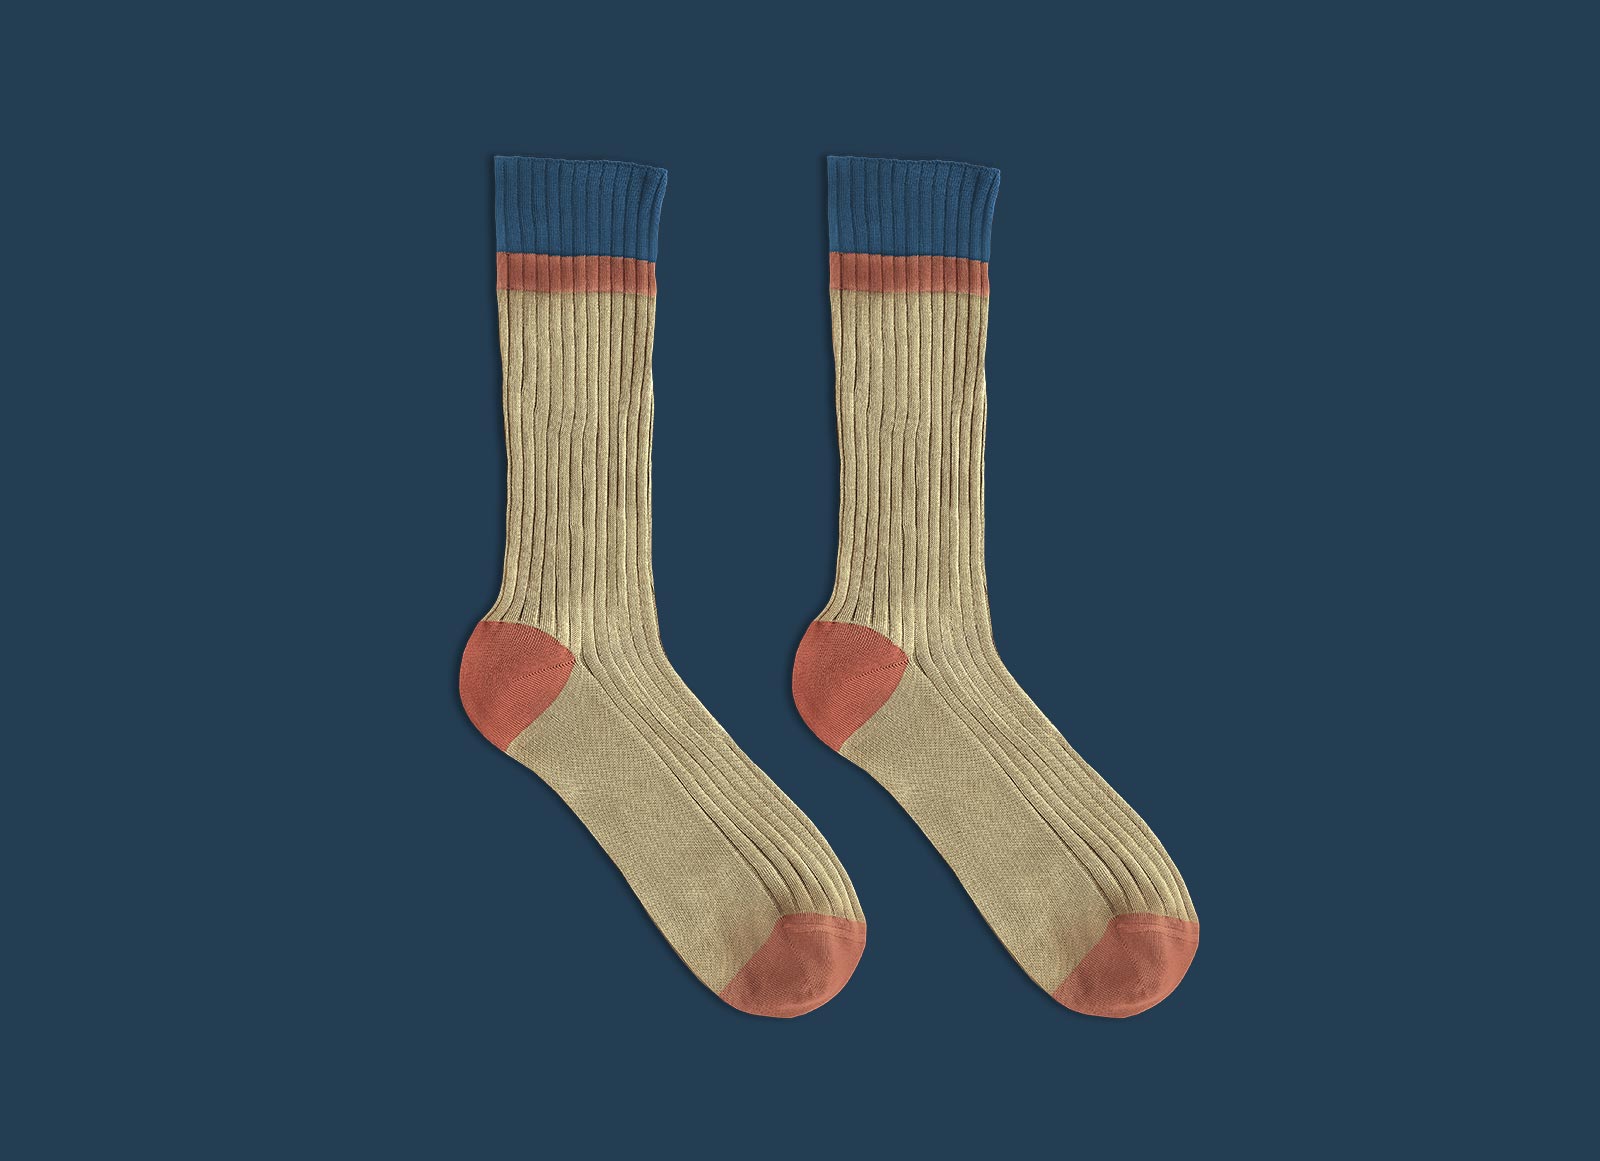 Maqueta de calcetines de ternera fotorrealista